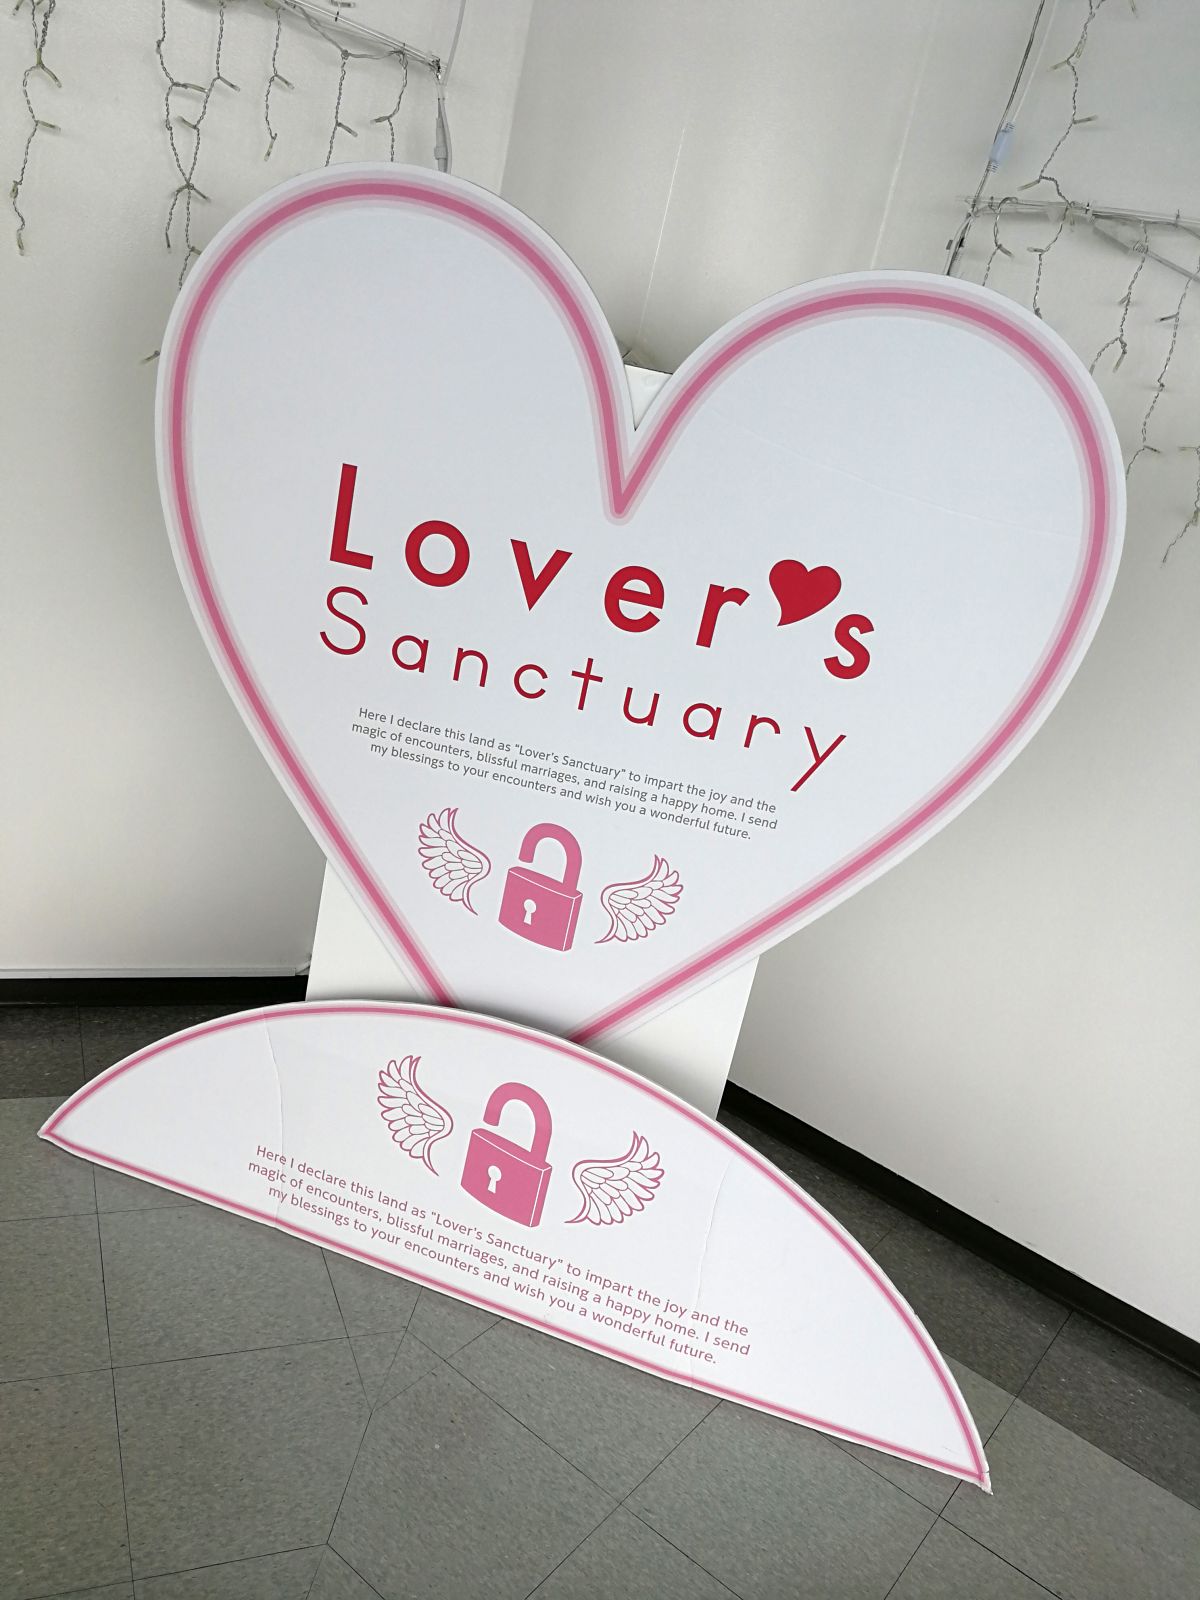 Lover’s Sanctuary